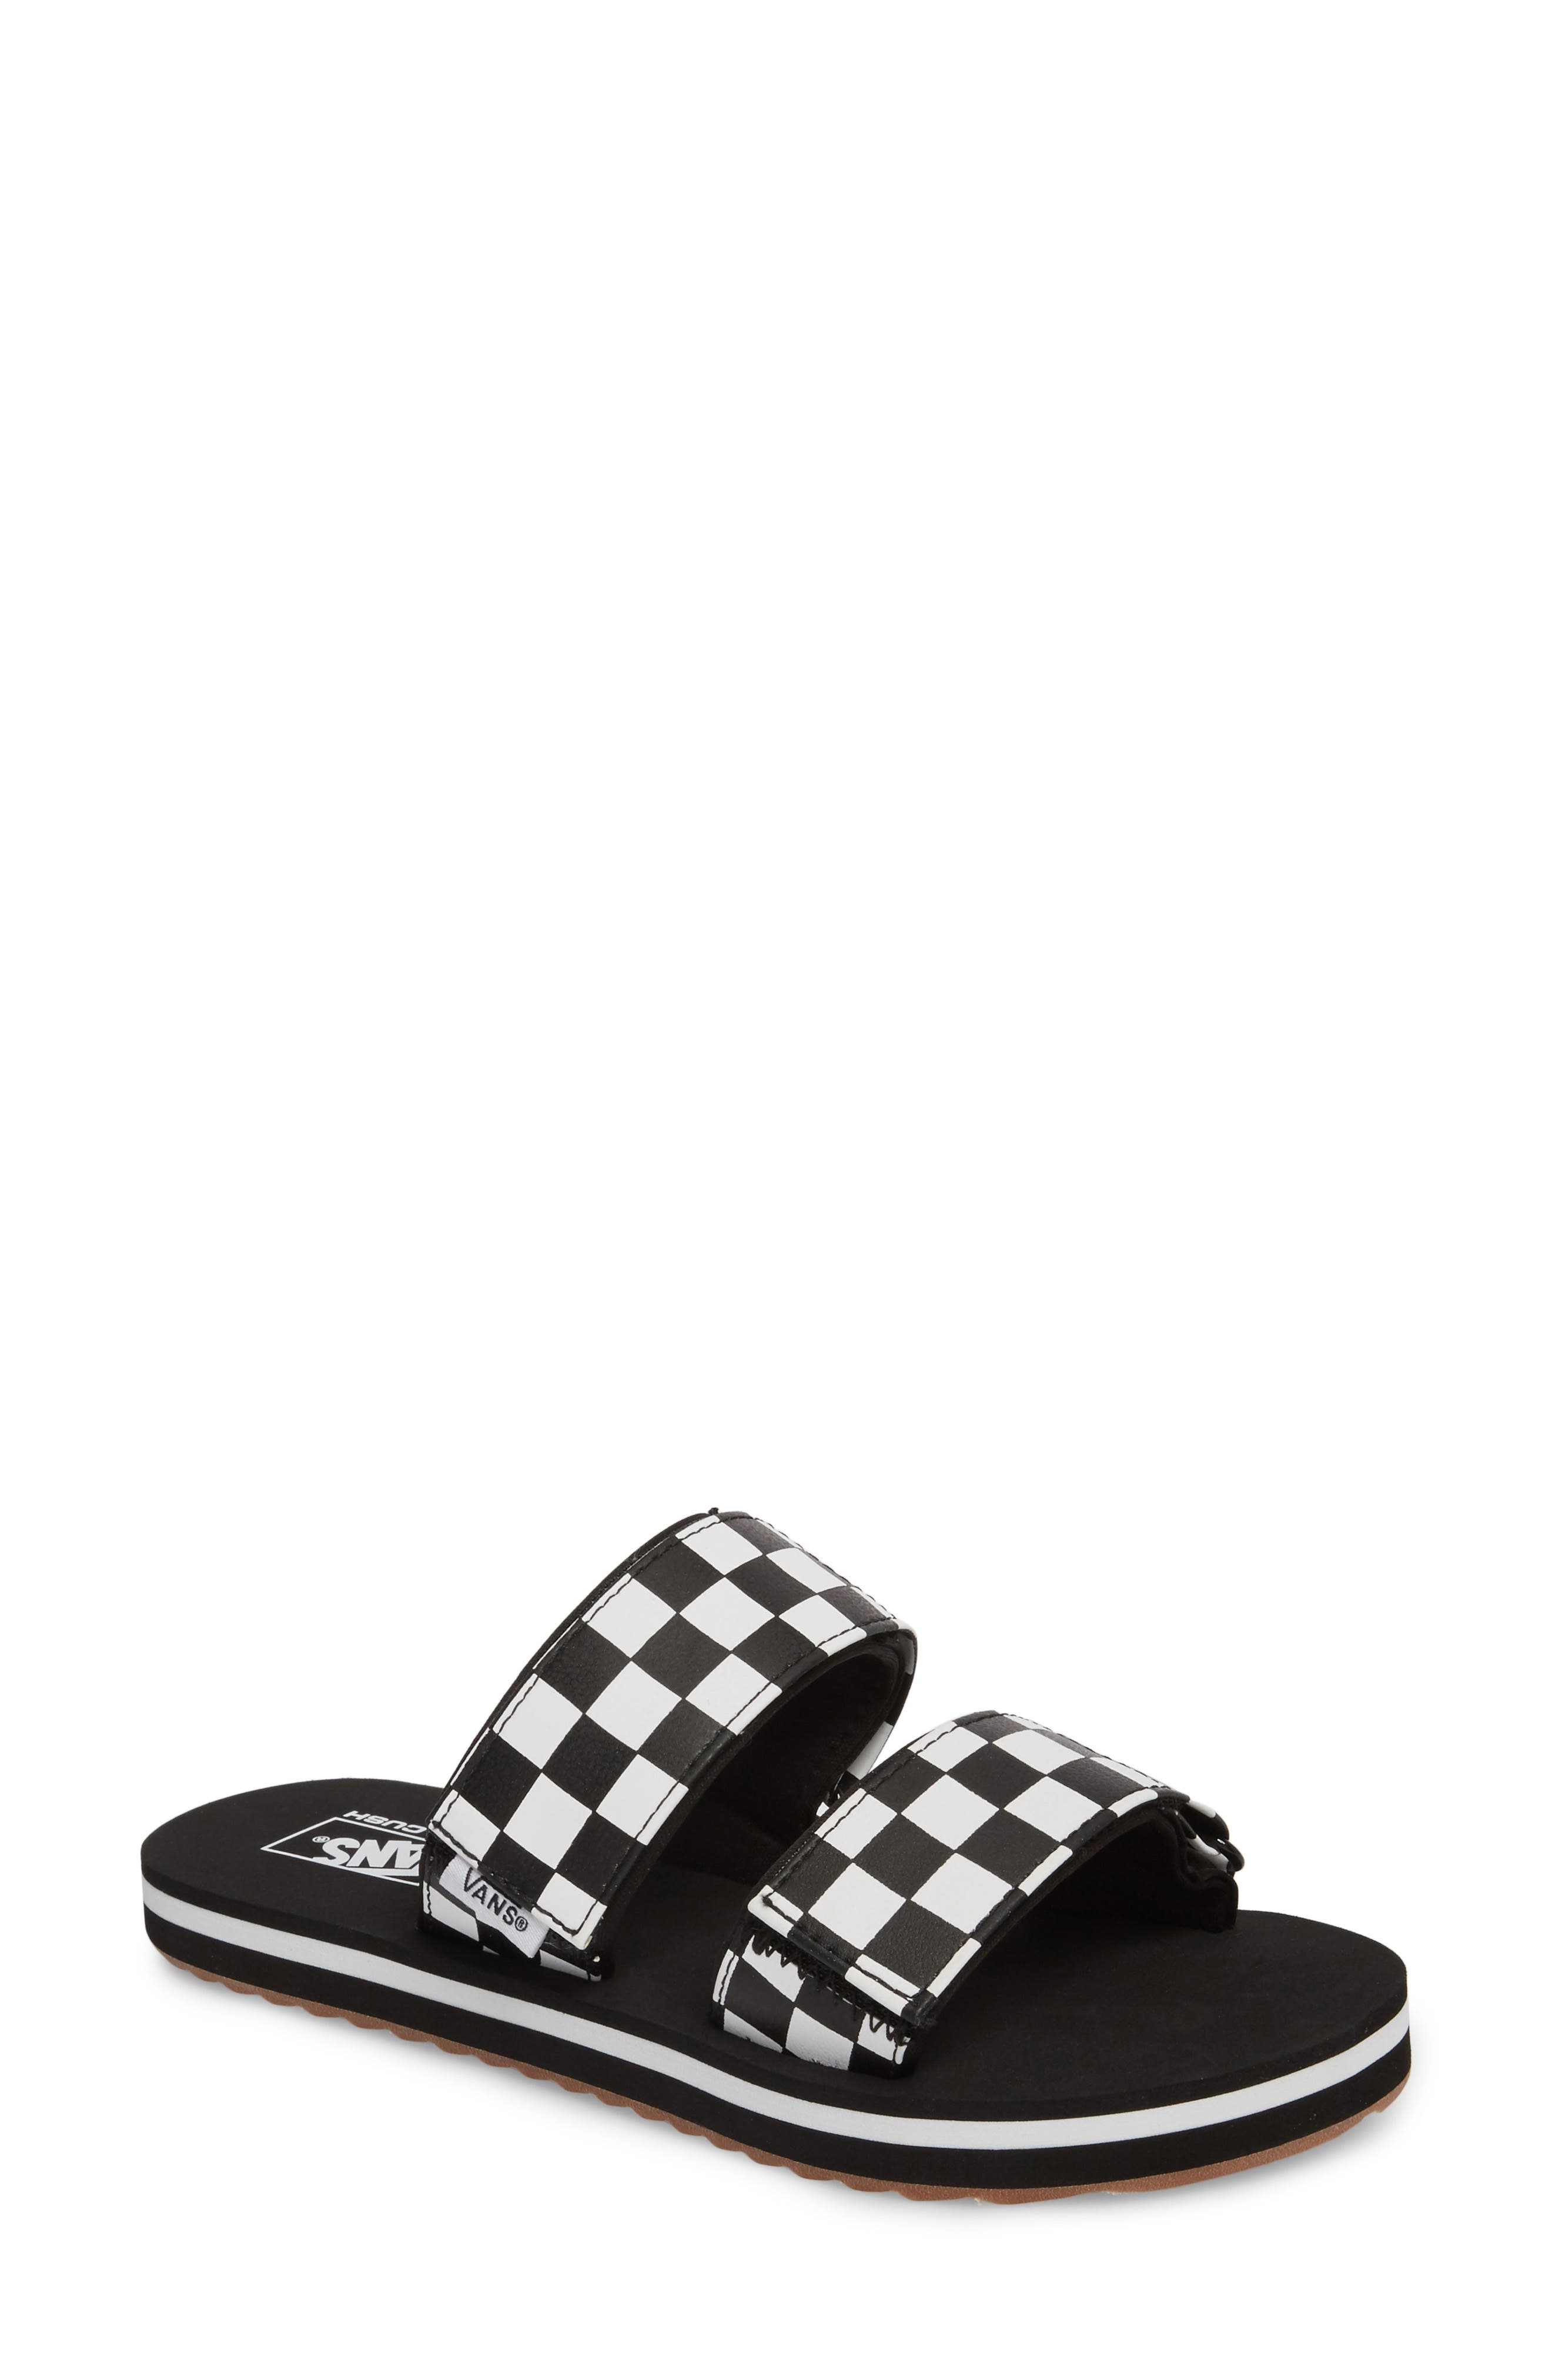 vans checkerboard sandals two strap